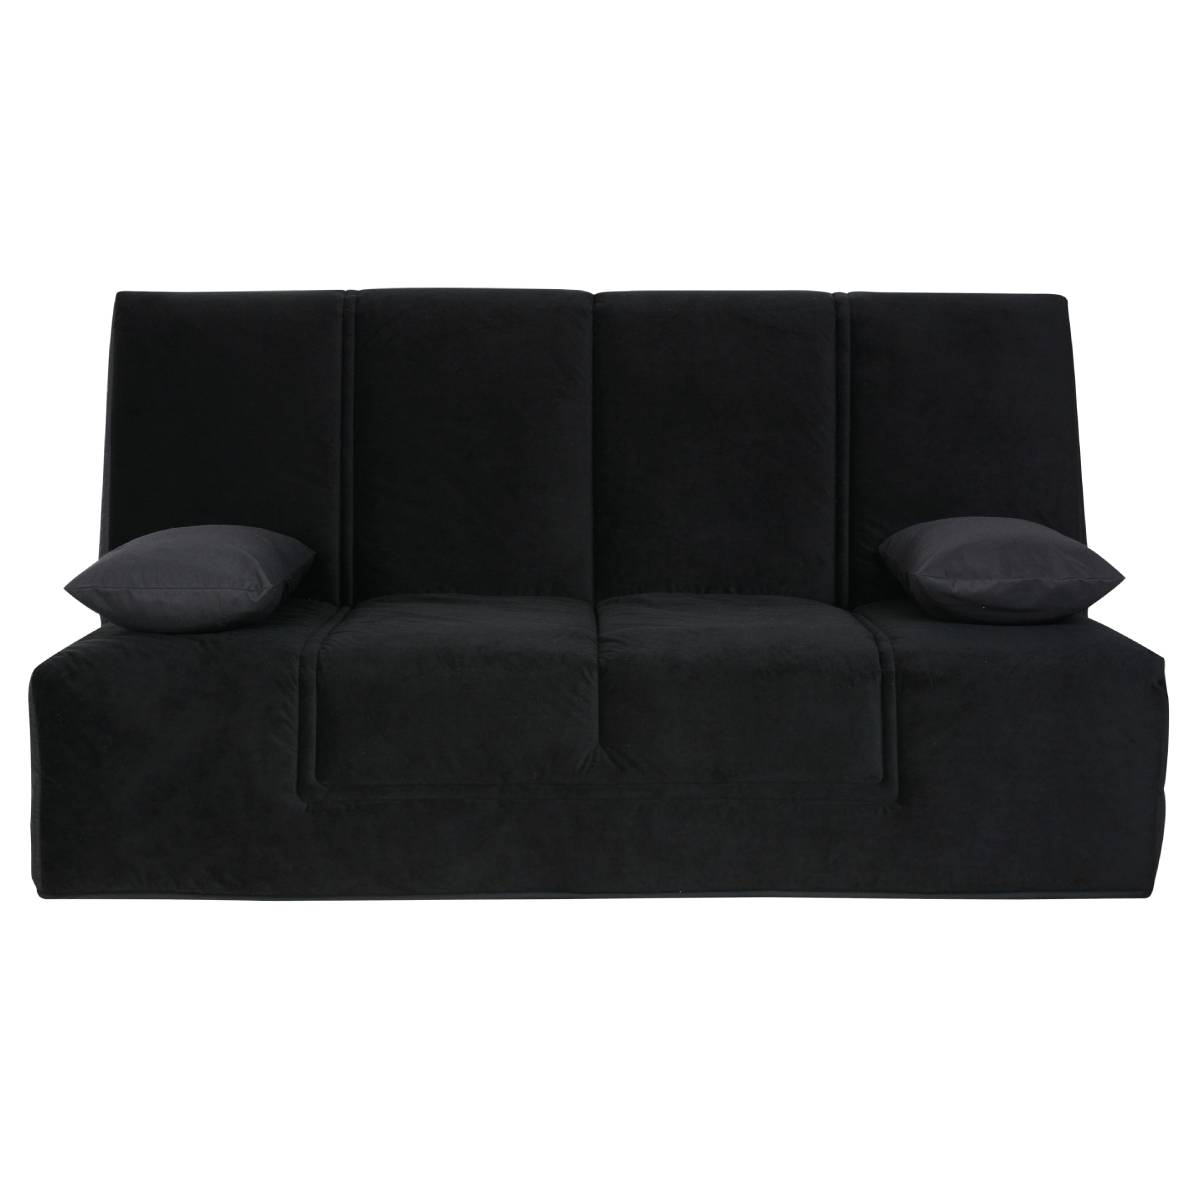 Clic clac Noir Tissu Design Confort Promotion